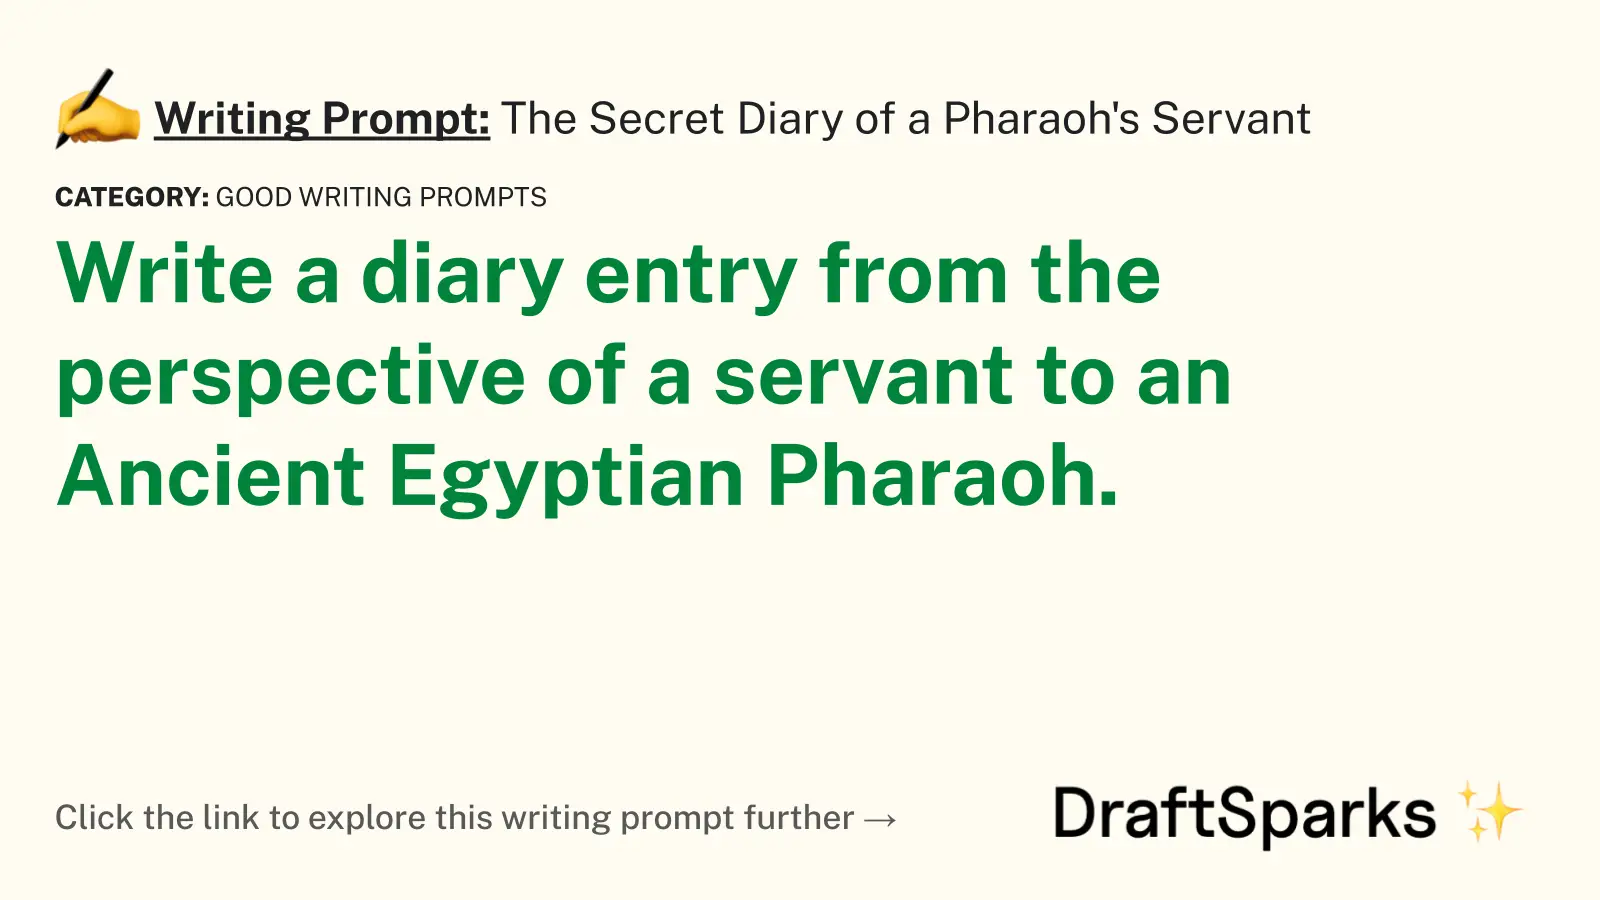 The Secret Diary of a Pharaoh’s Servant